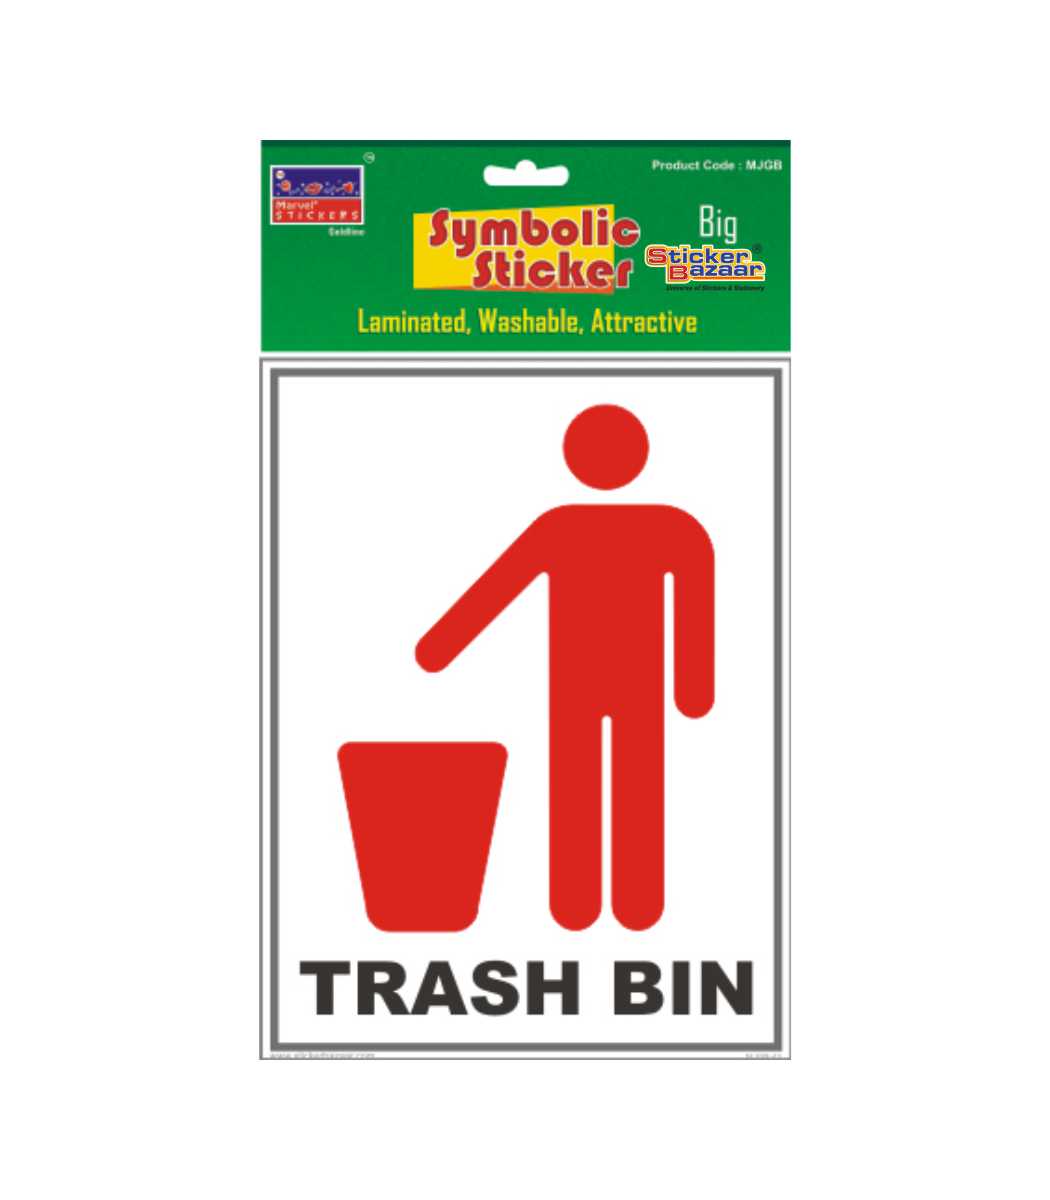 Trash Bin Big Symbolic Sticker